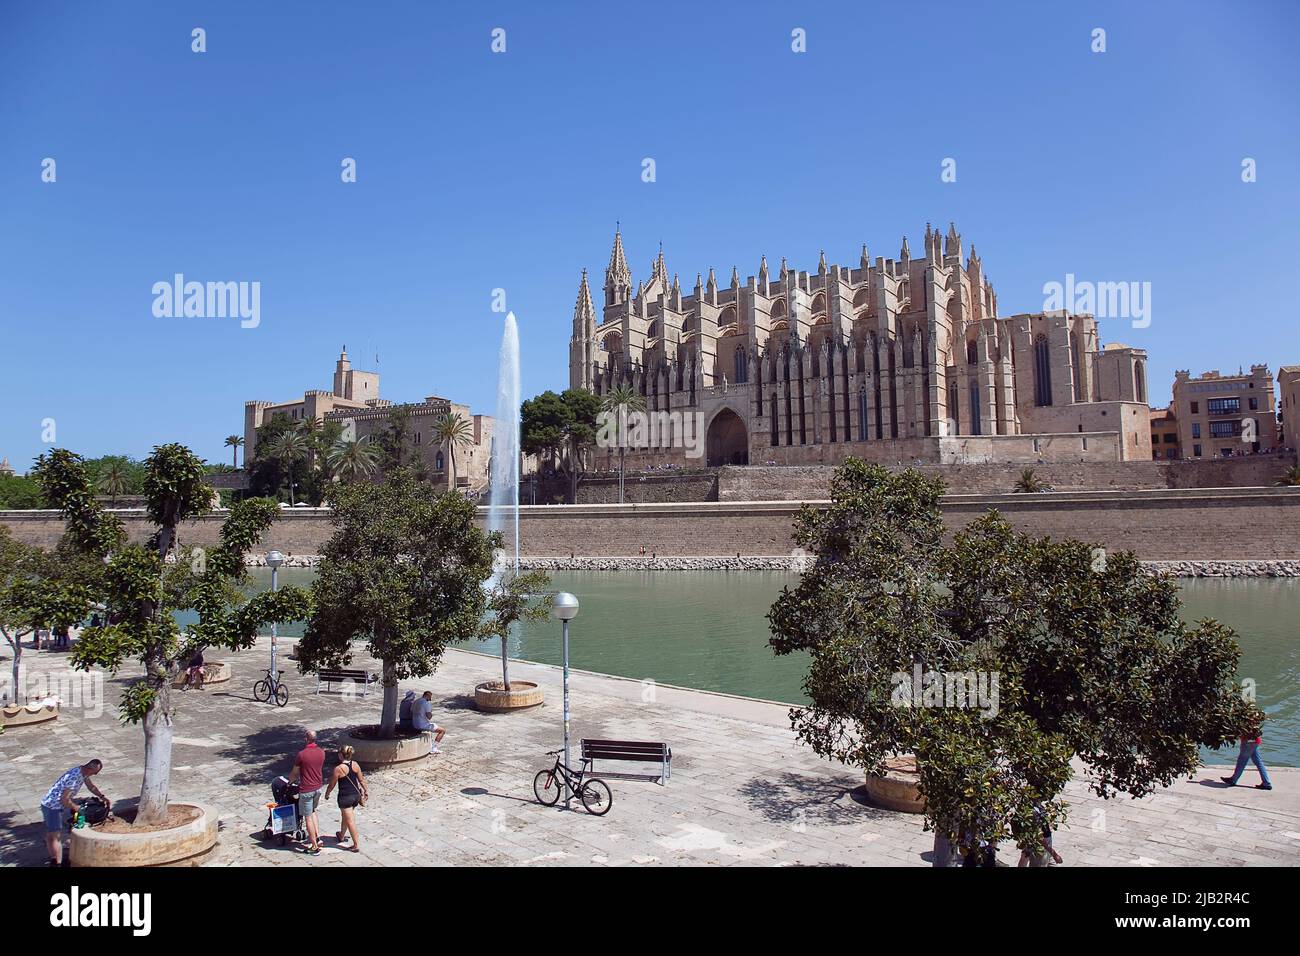 Spain, Balearic Islands, Majorca, Palma de Mallorca, Royal Palace of La Almudaina and La Seu Gothic Roman Catholic Cathedral of Santa Maria with fount Stock Photo